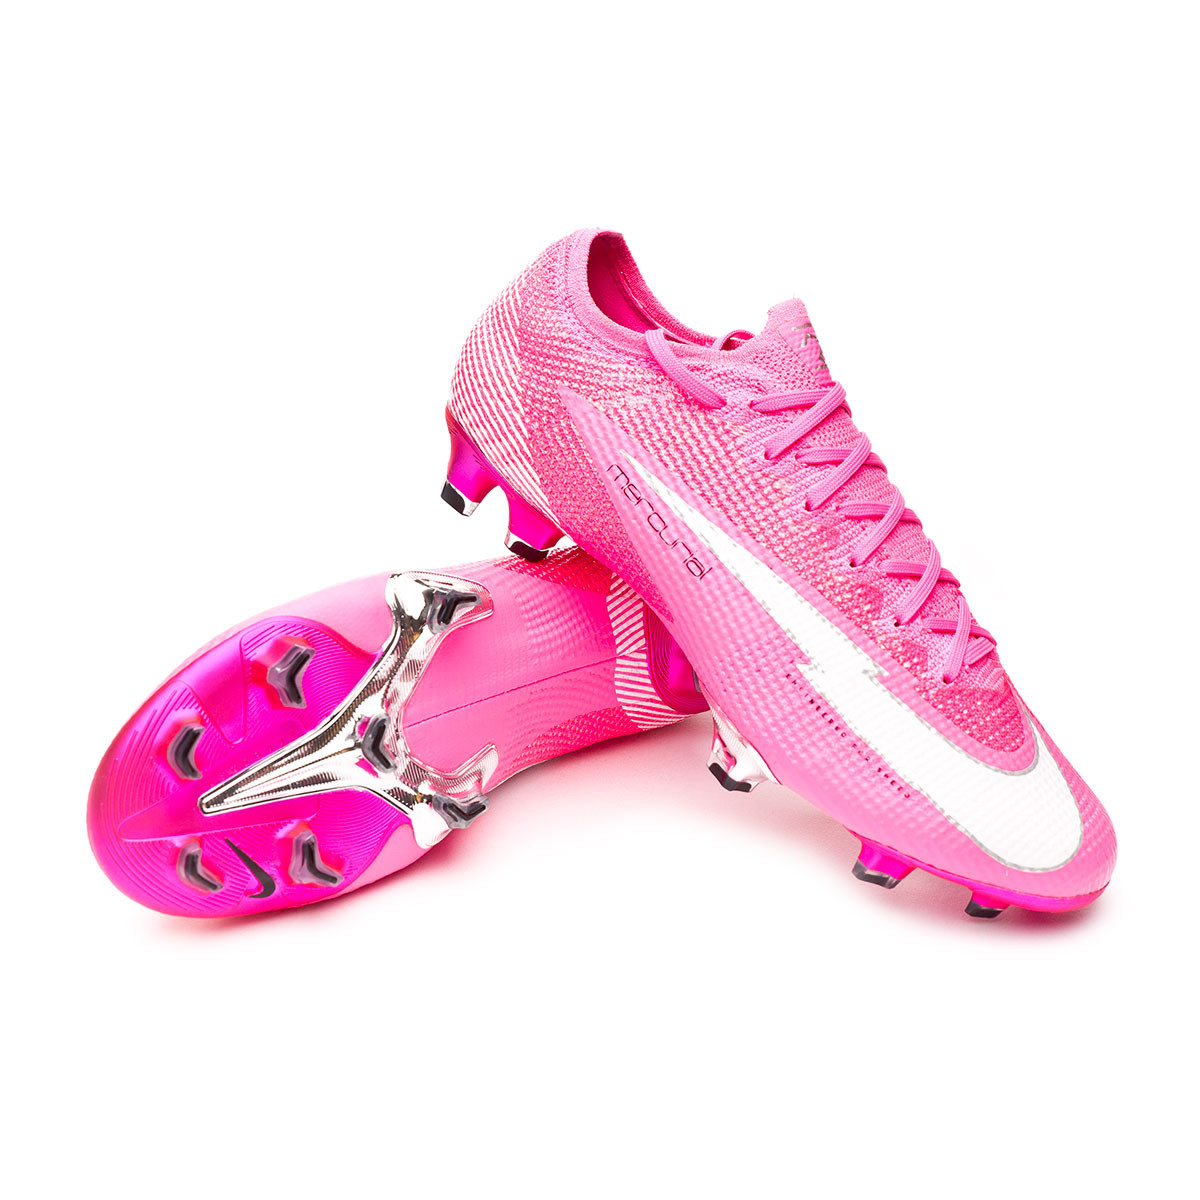 Football Boots Nike Mercurial Vapor XIII Elite Kylian Mbappé FG Pink  blast-White-Black-Chrome - Football store Fútbol Emotion